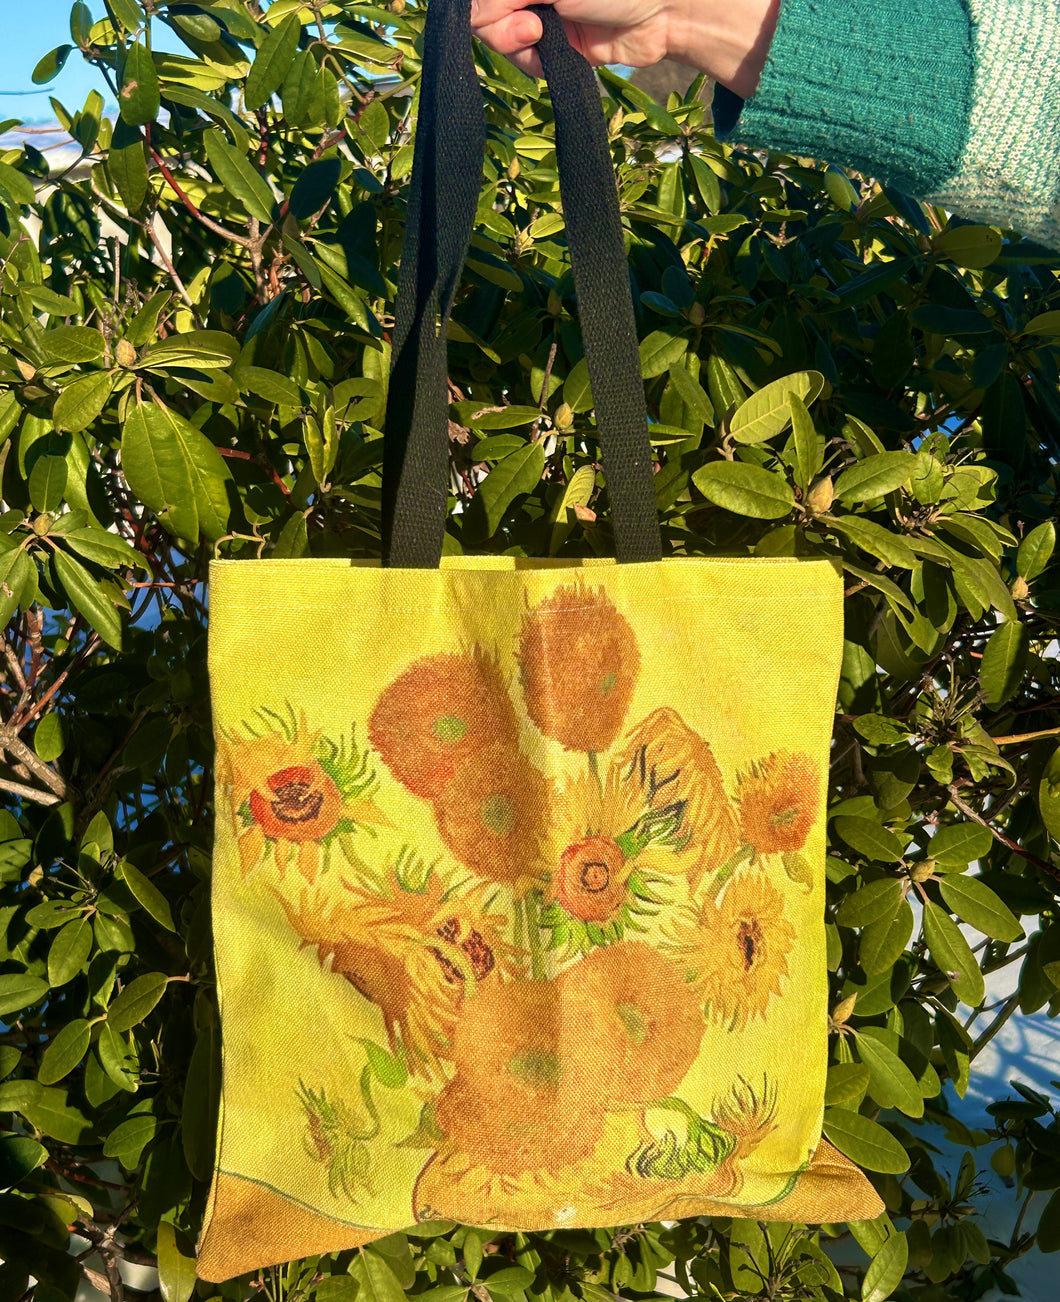 Sunflower Tote Bag